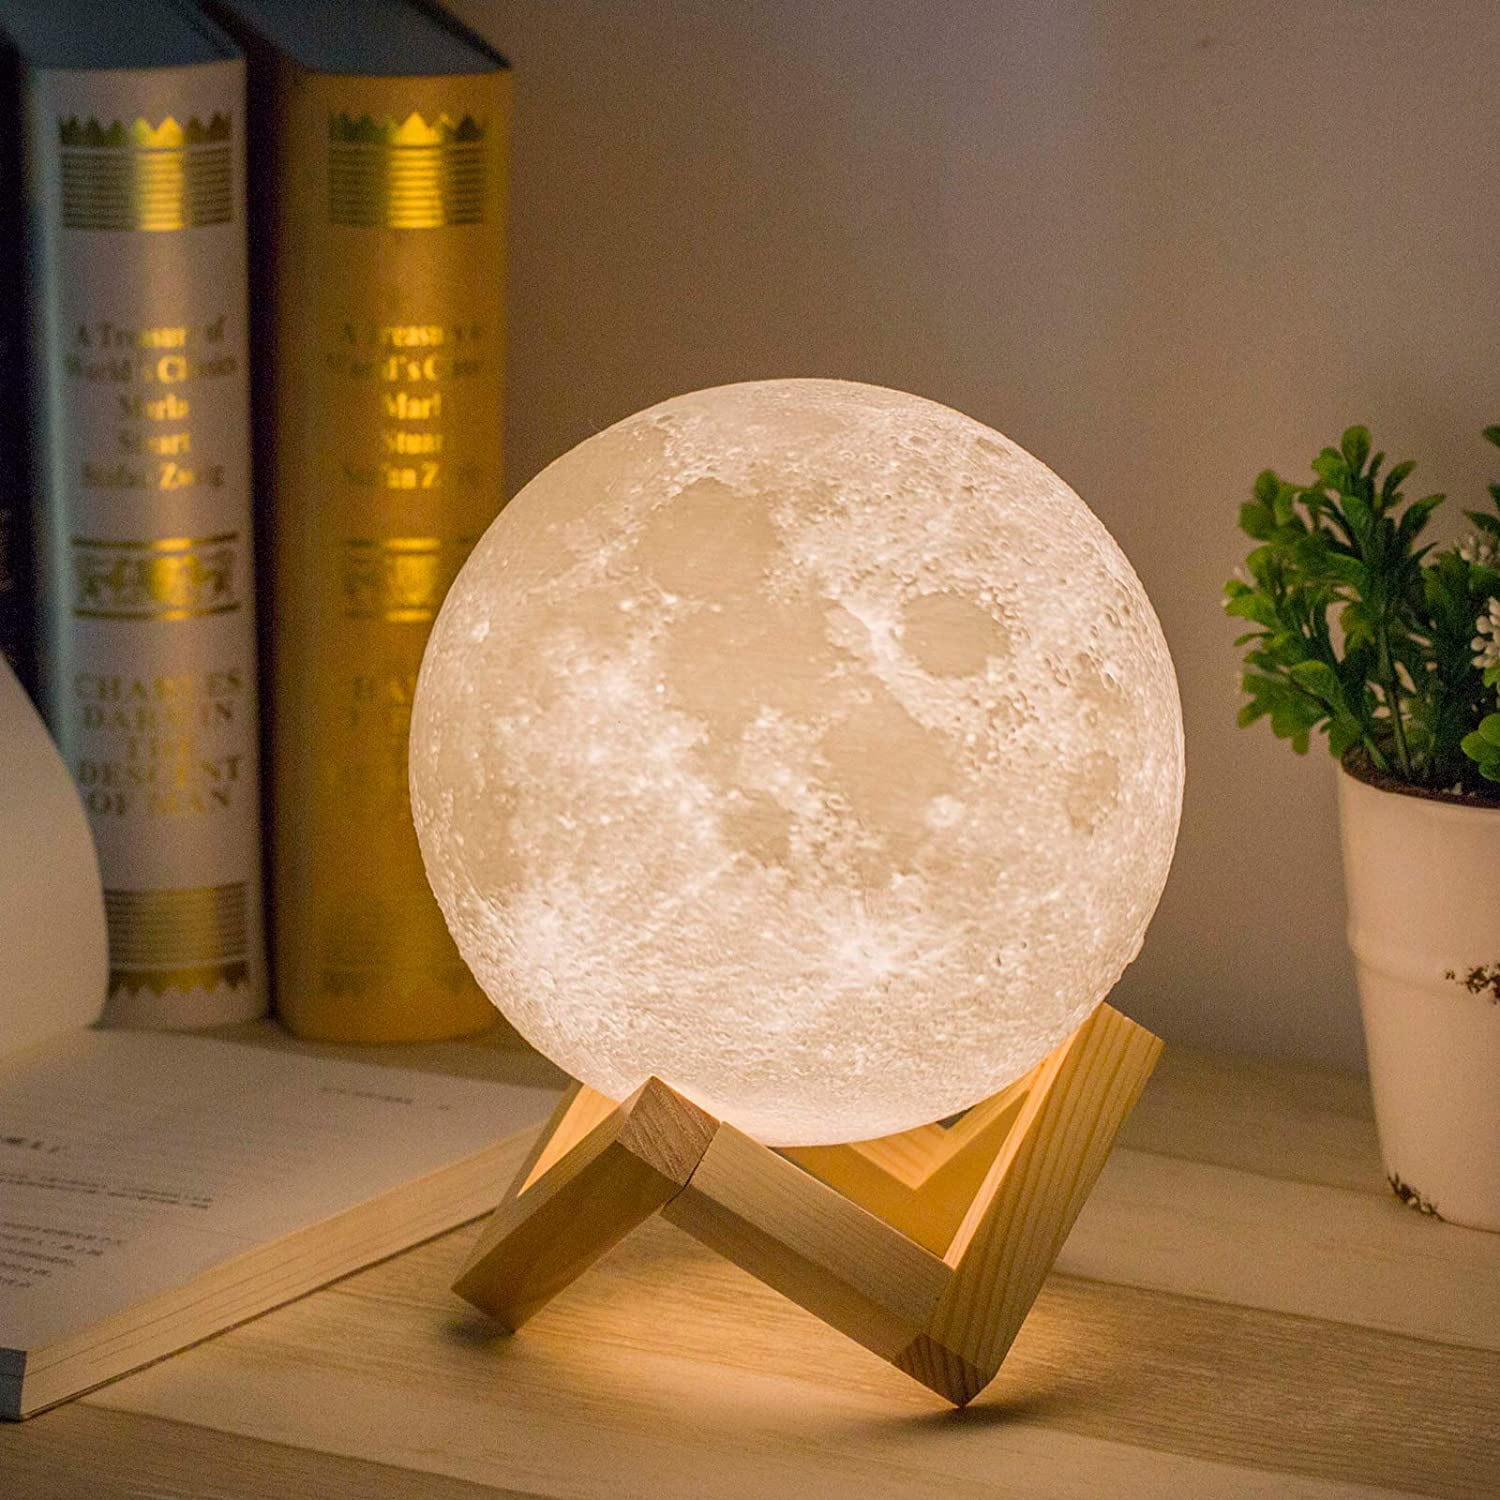 15cm Large Moon Lamp Night Light Lunar Touch Moonlight 3D Globe LED Desk Lantern 